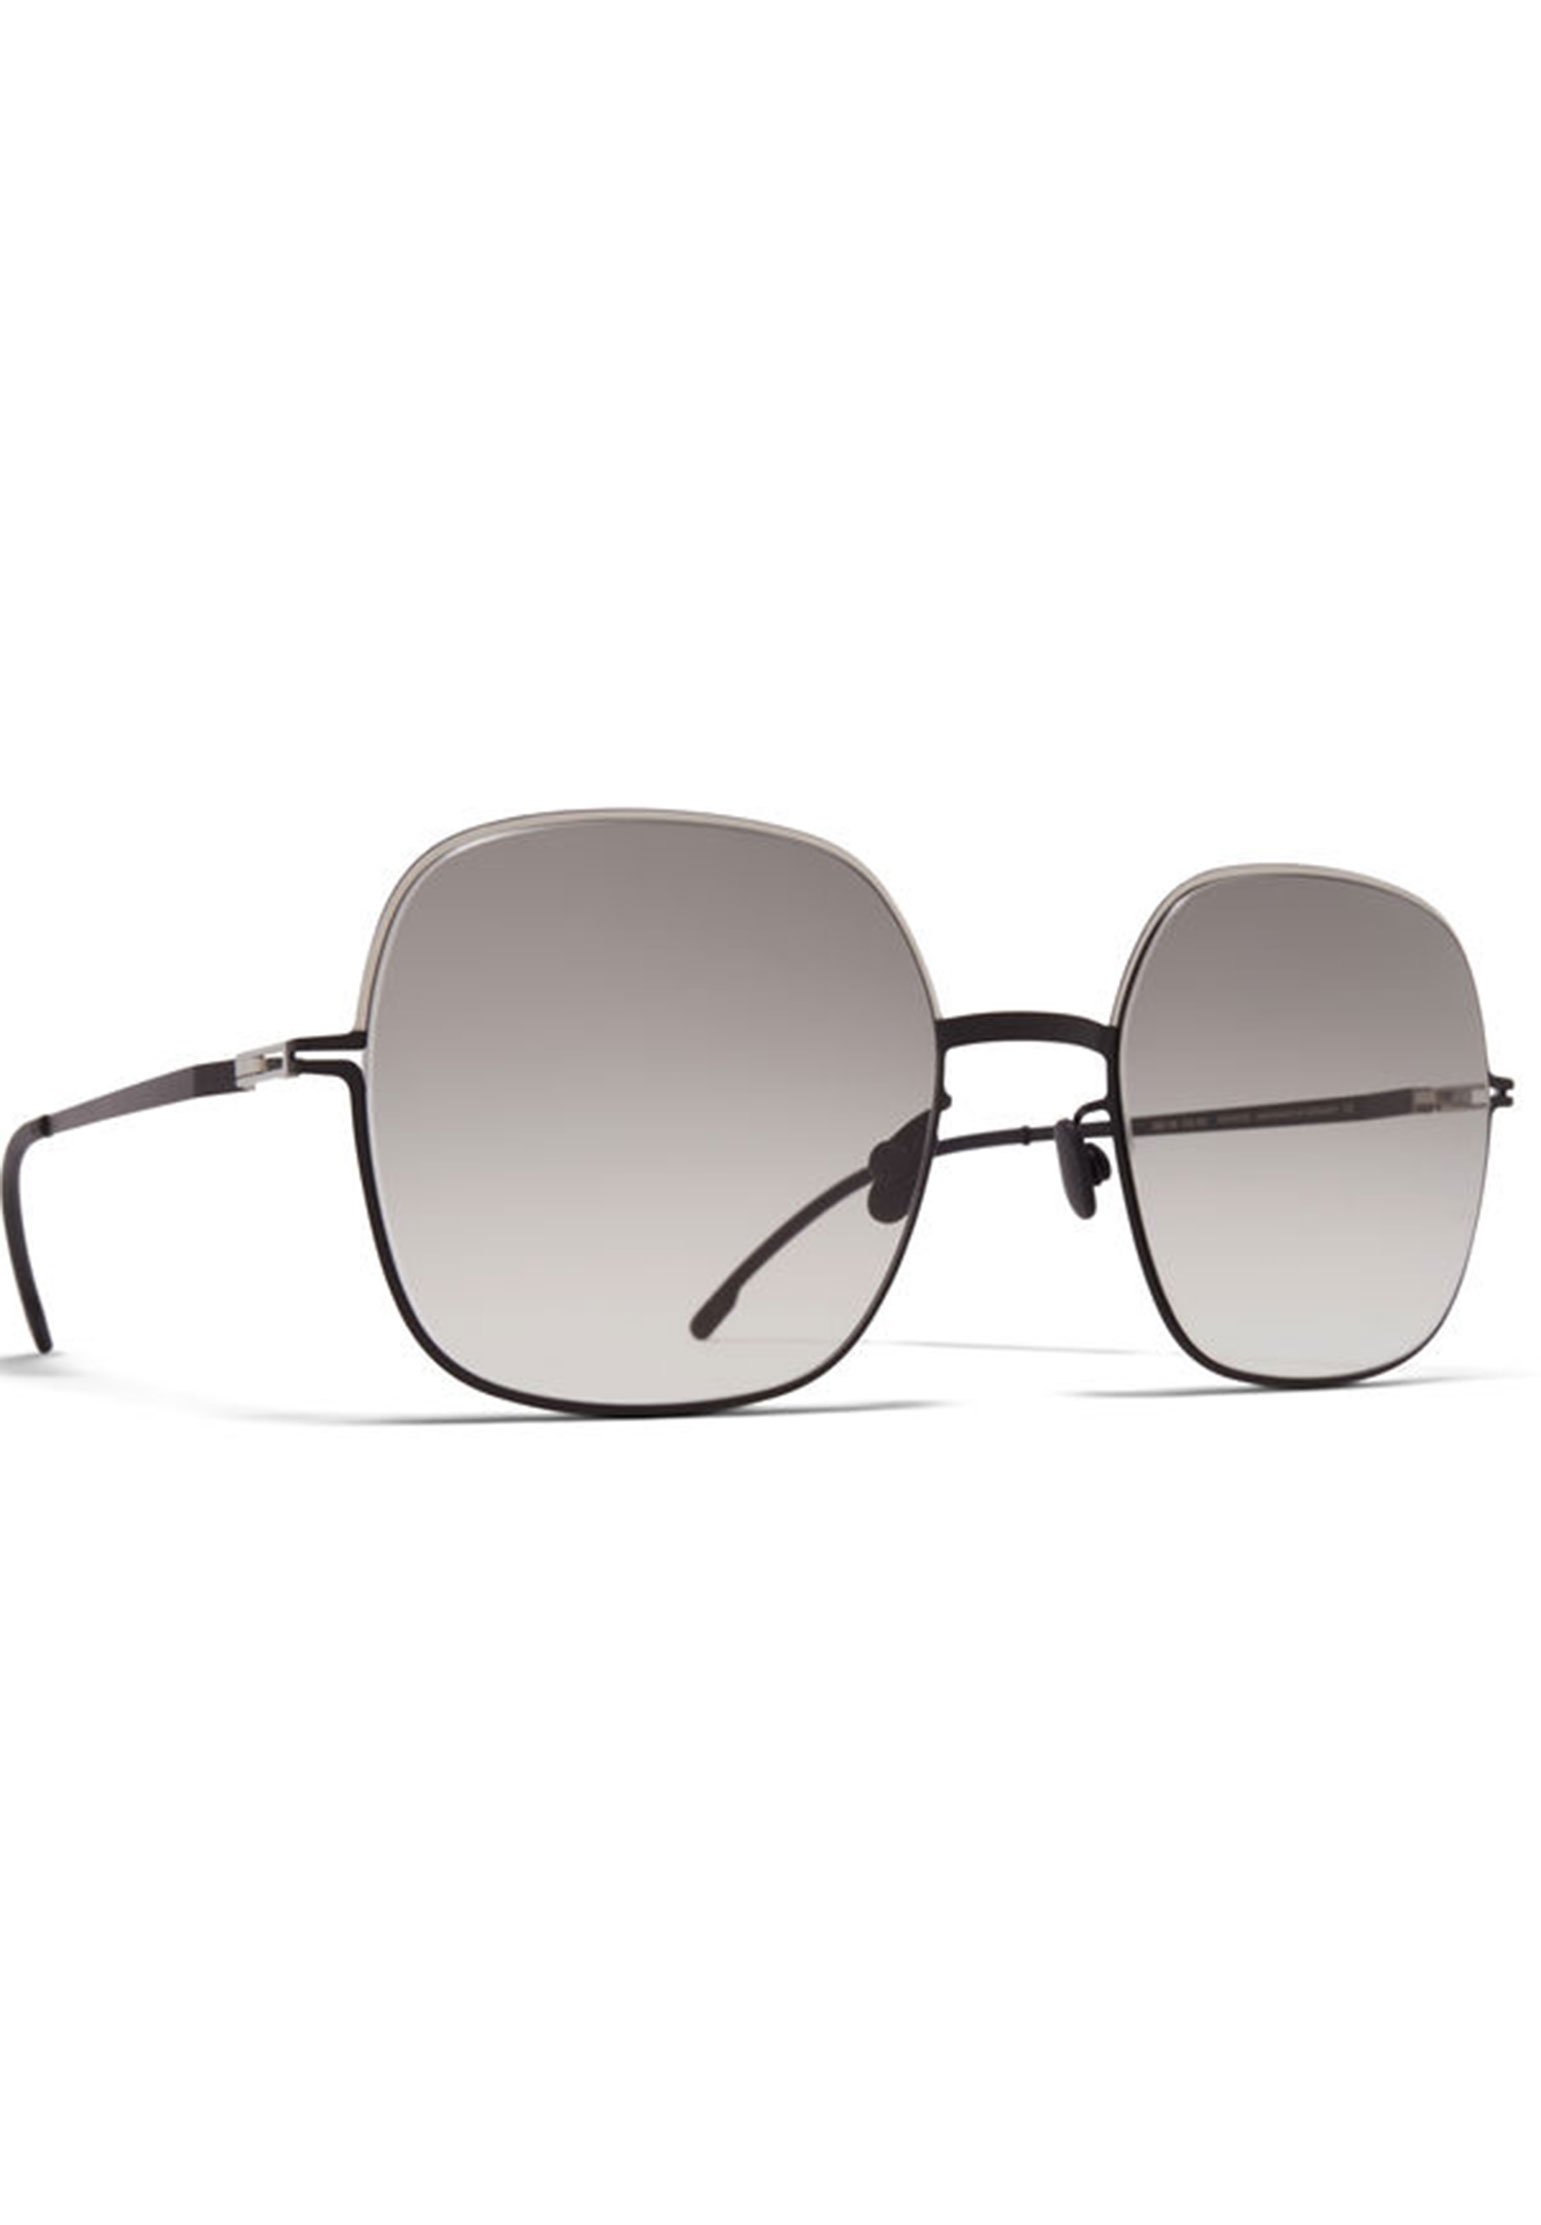 Sunglasses MYKITA Color: black (Code: 224) in online store Allure